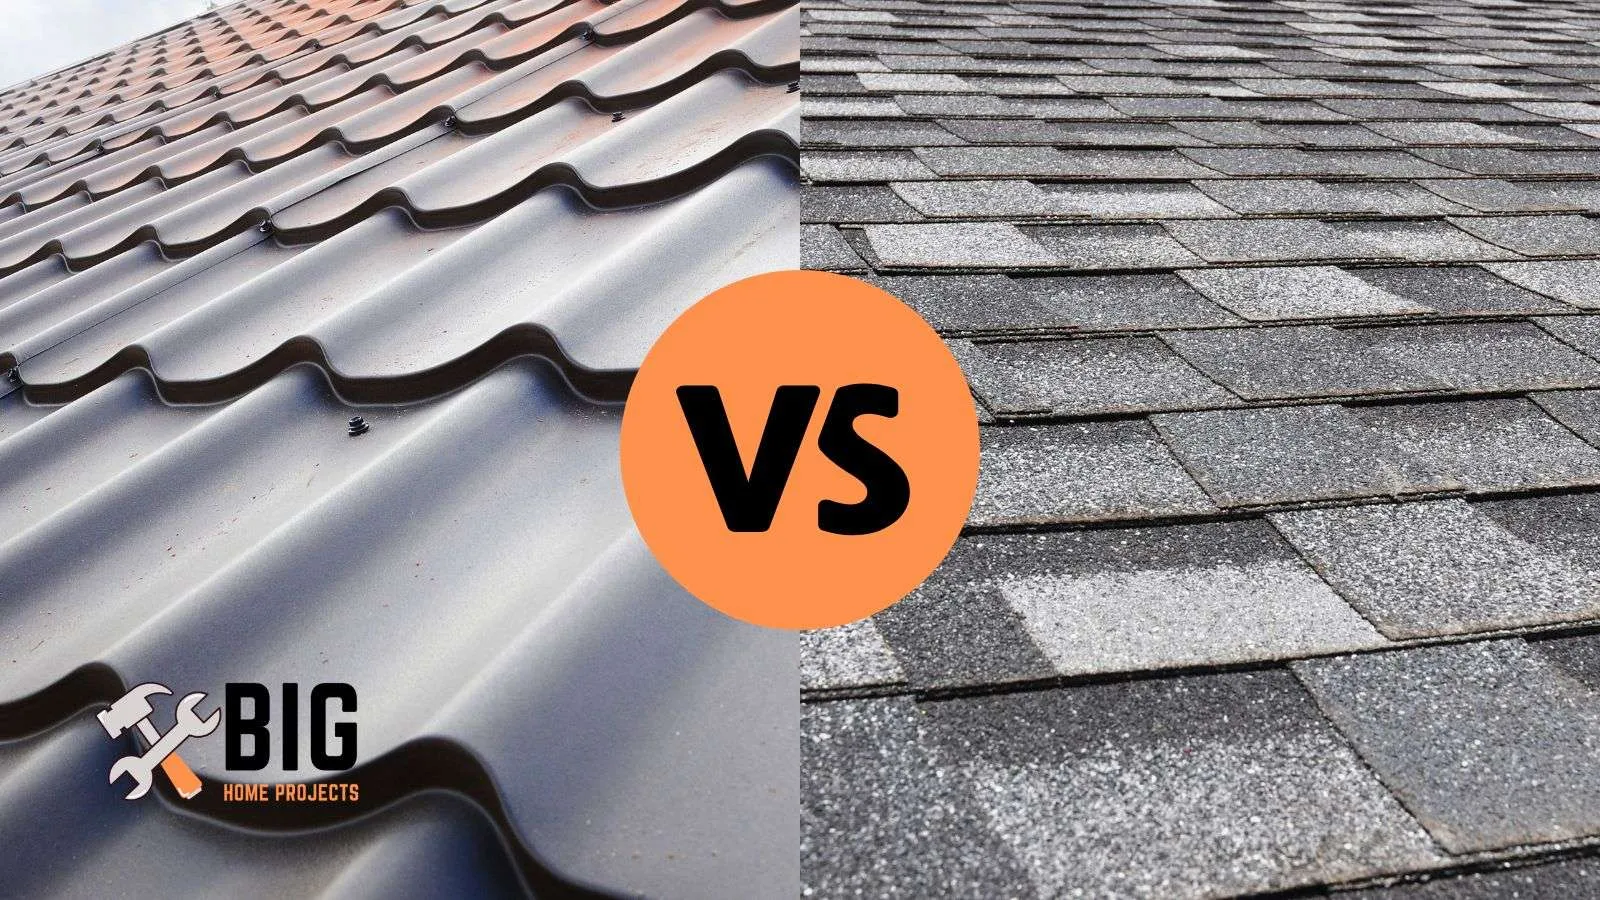 Metal roofs vs asphalt shingles - bighomeprojects.com